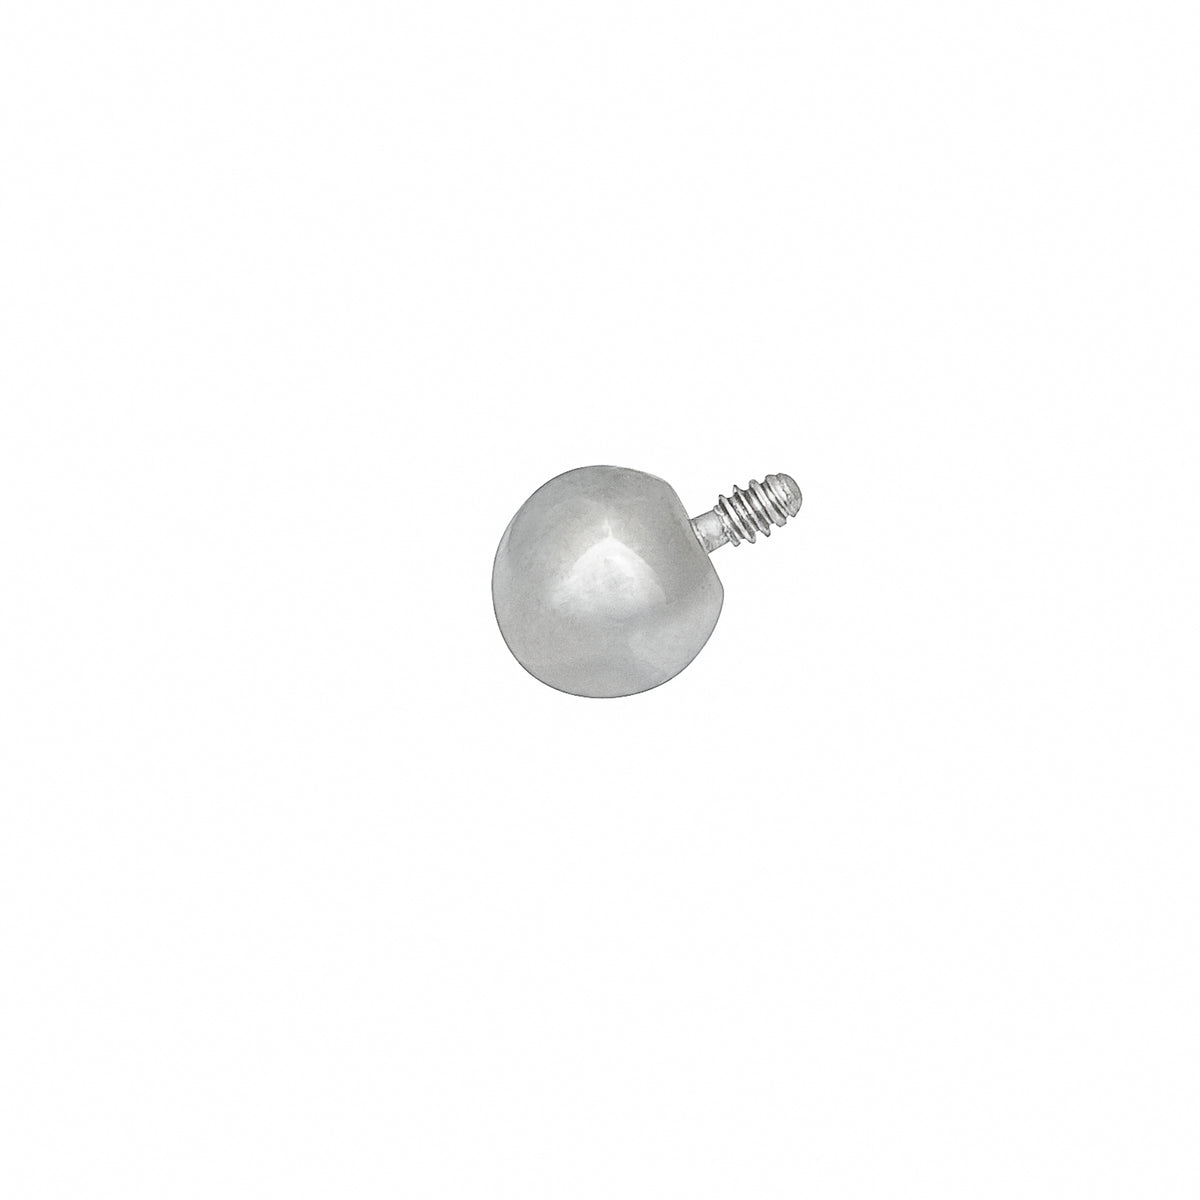 Screw on Ball (internal) in Silver